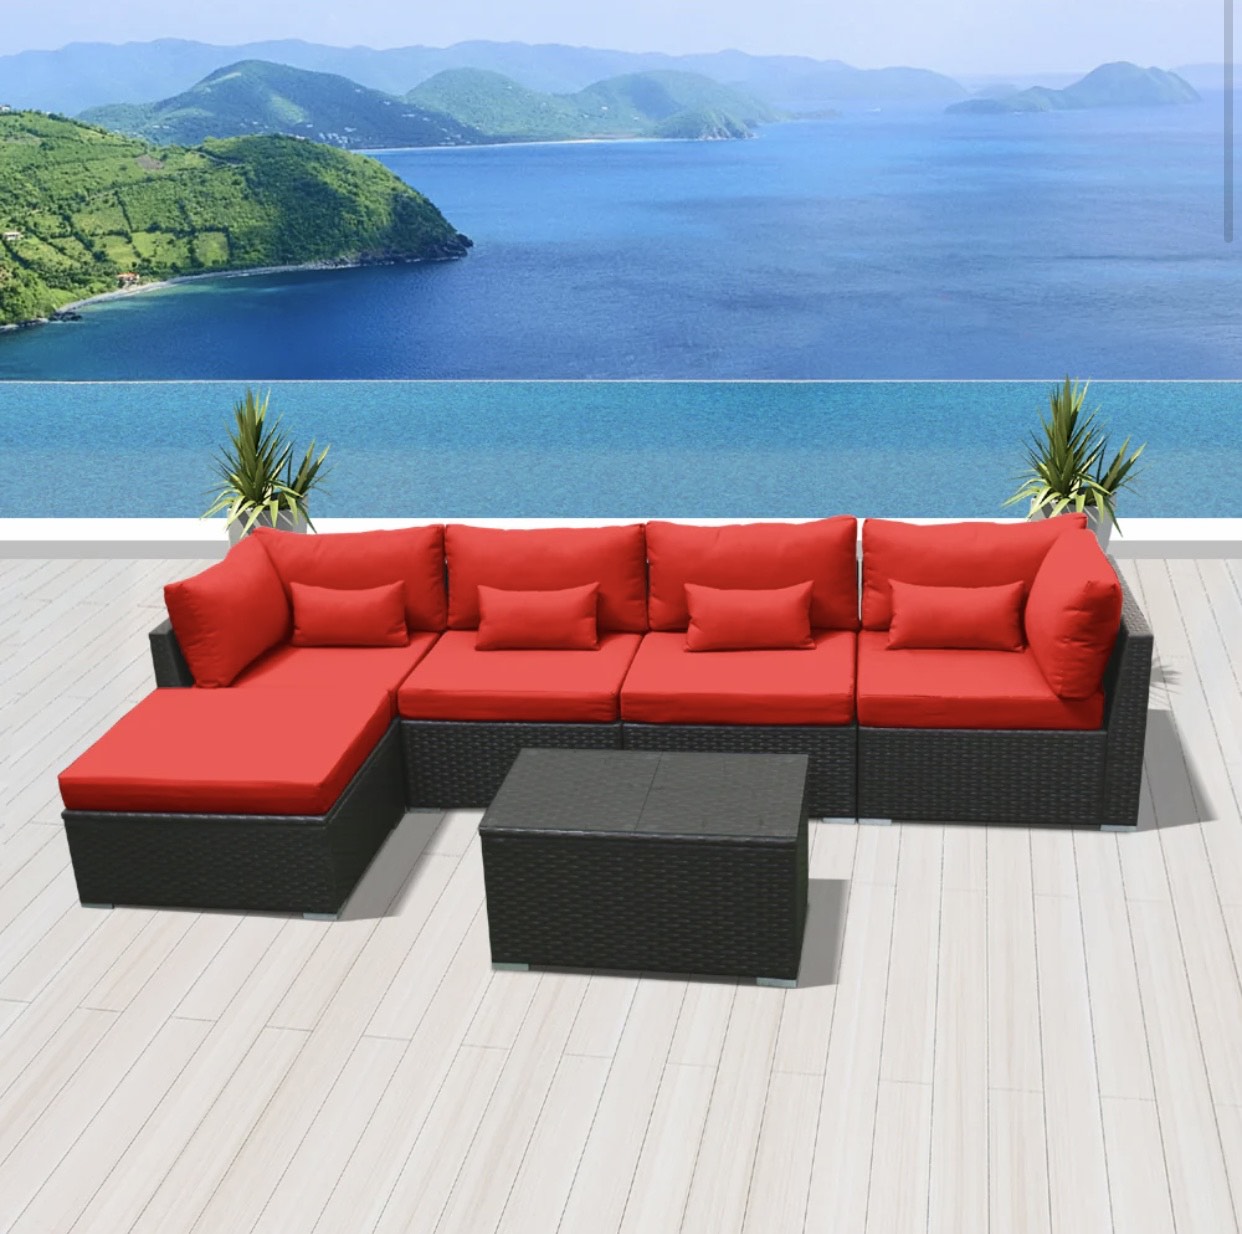 Red Big Modern Wicker Patio Furniture Sofa Set Six Piece 6